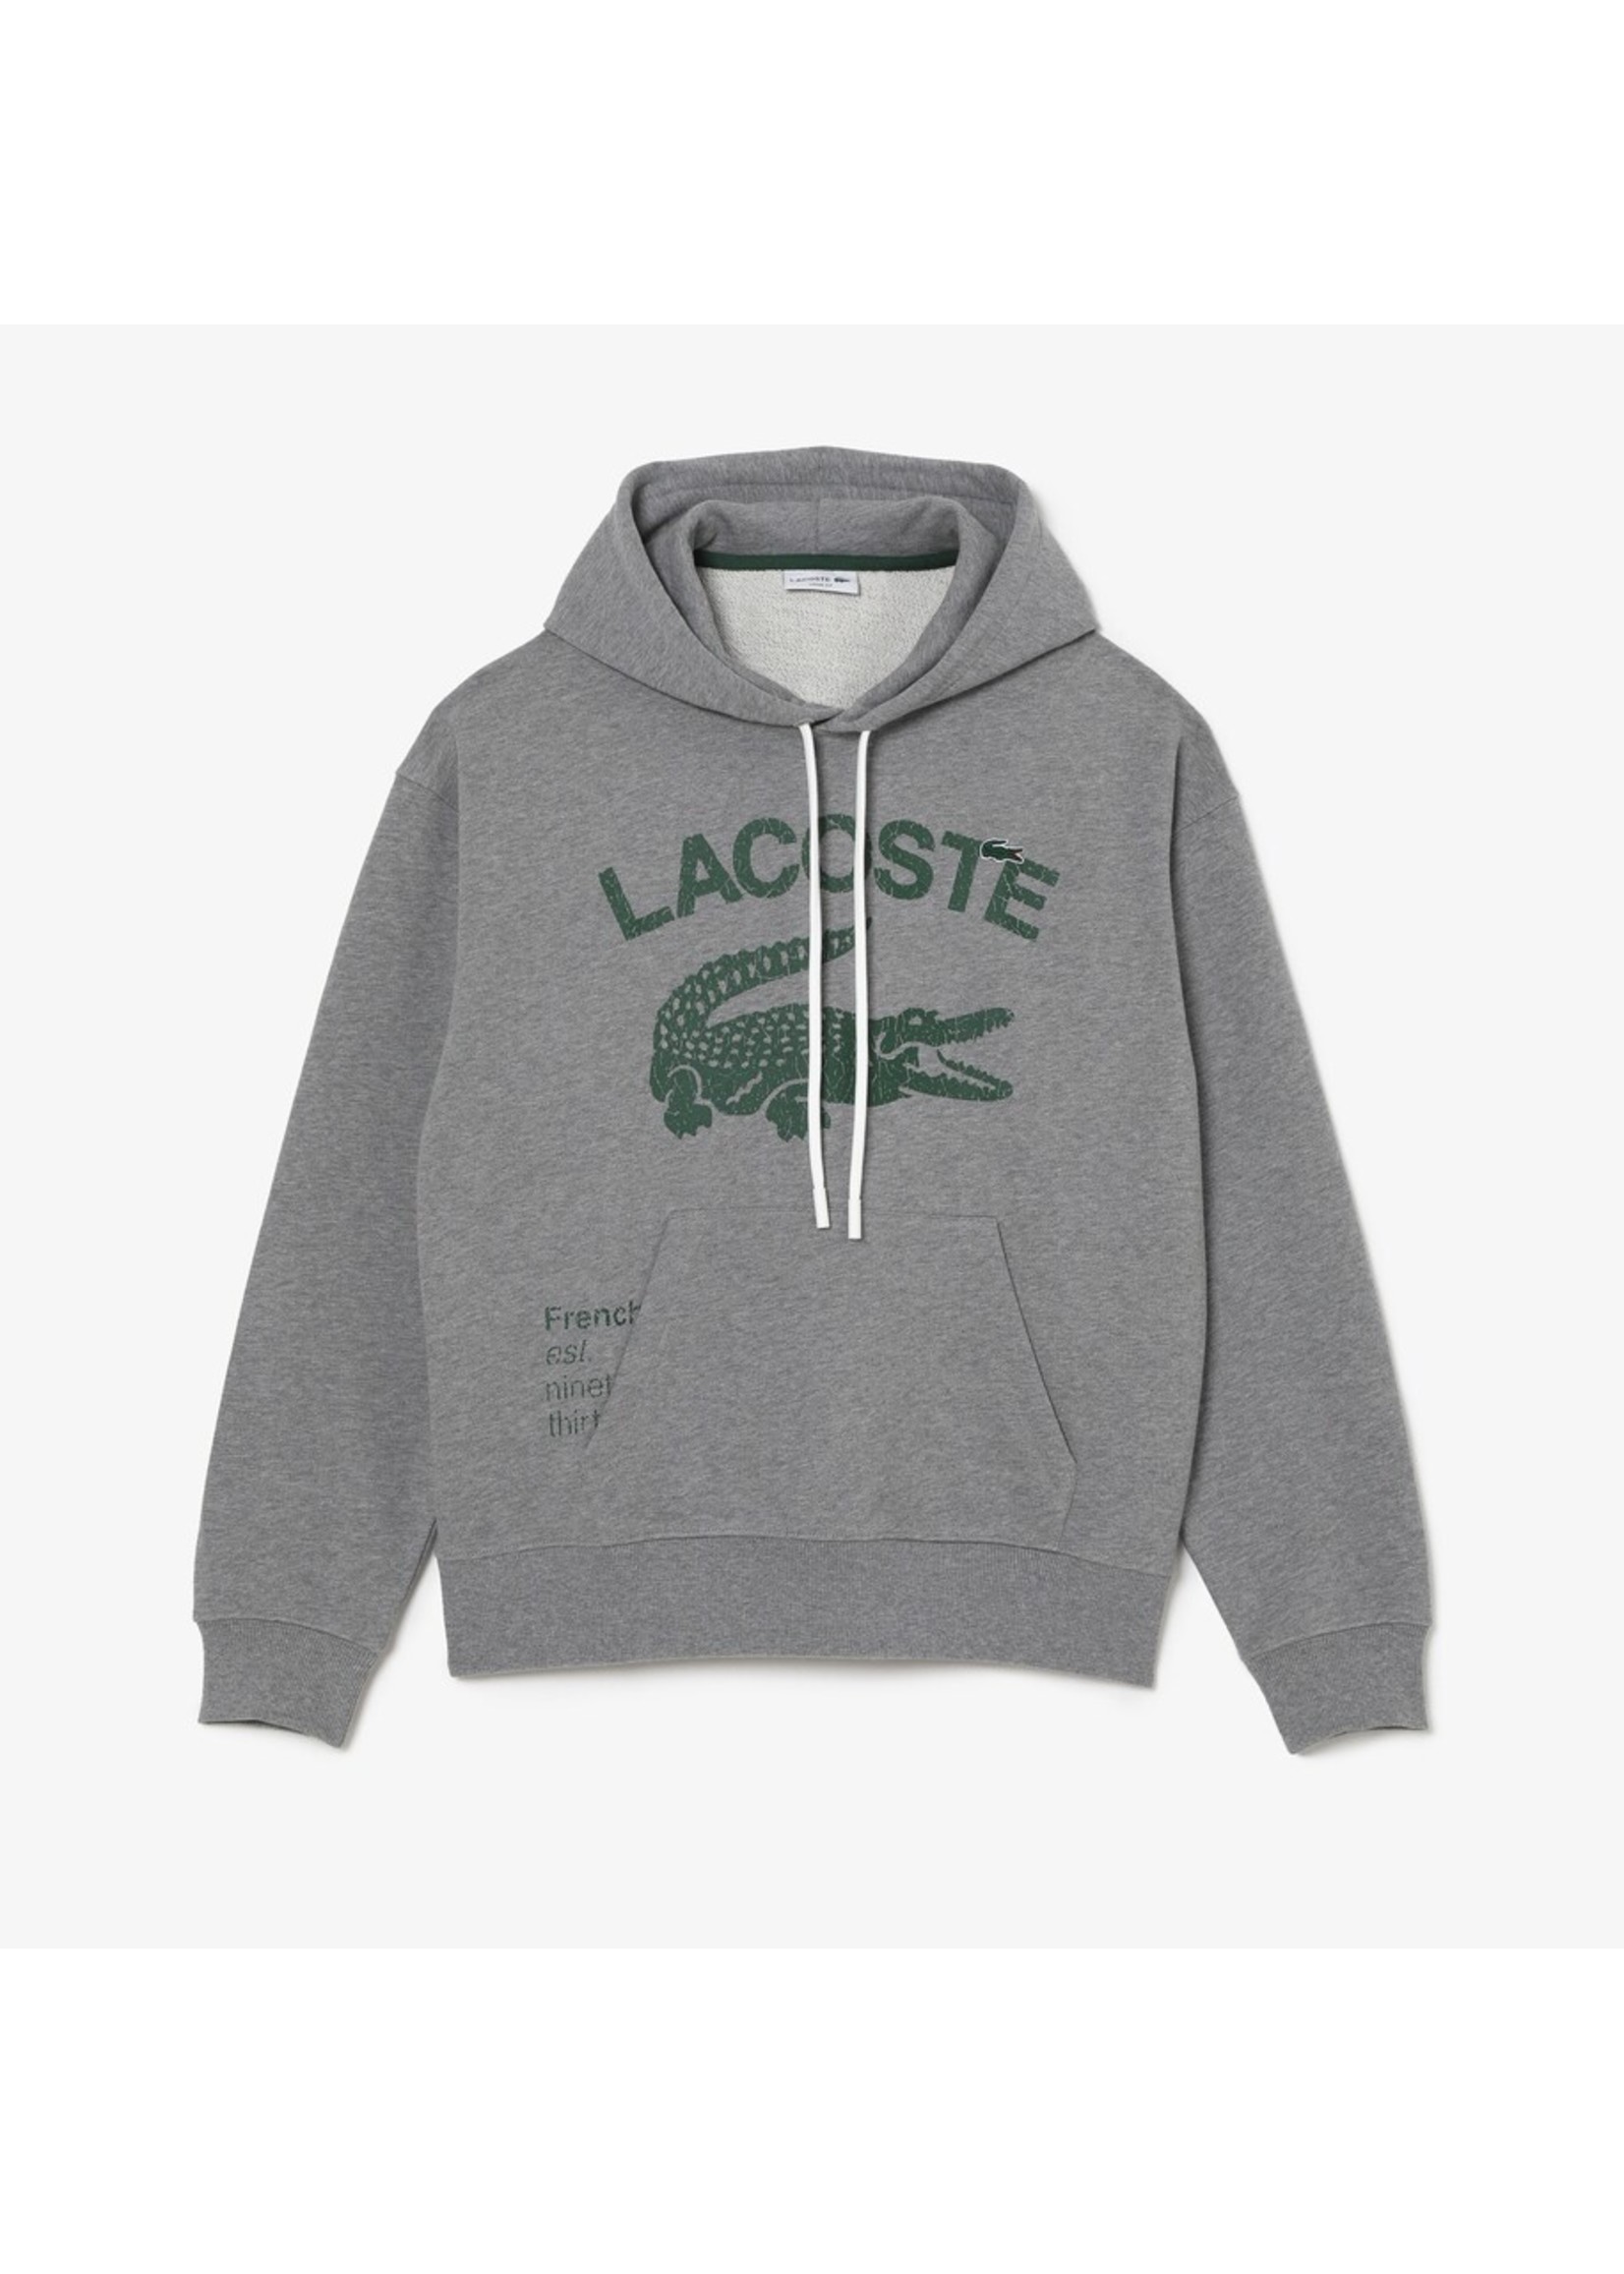 Lacoste Sweatshirt Crocodile Loose Fit